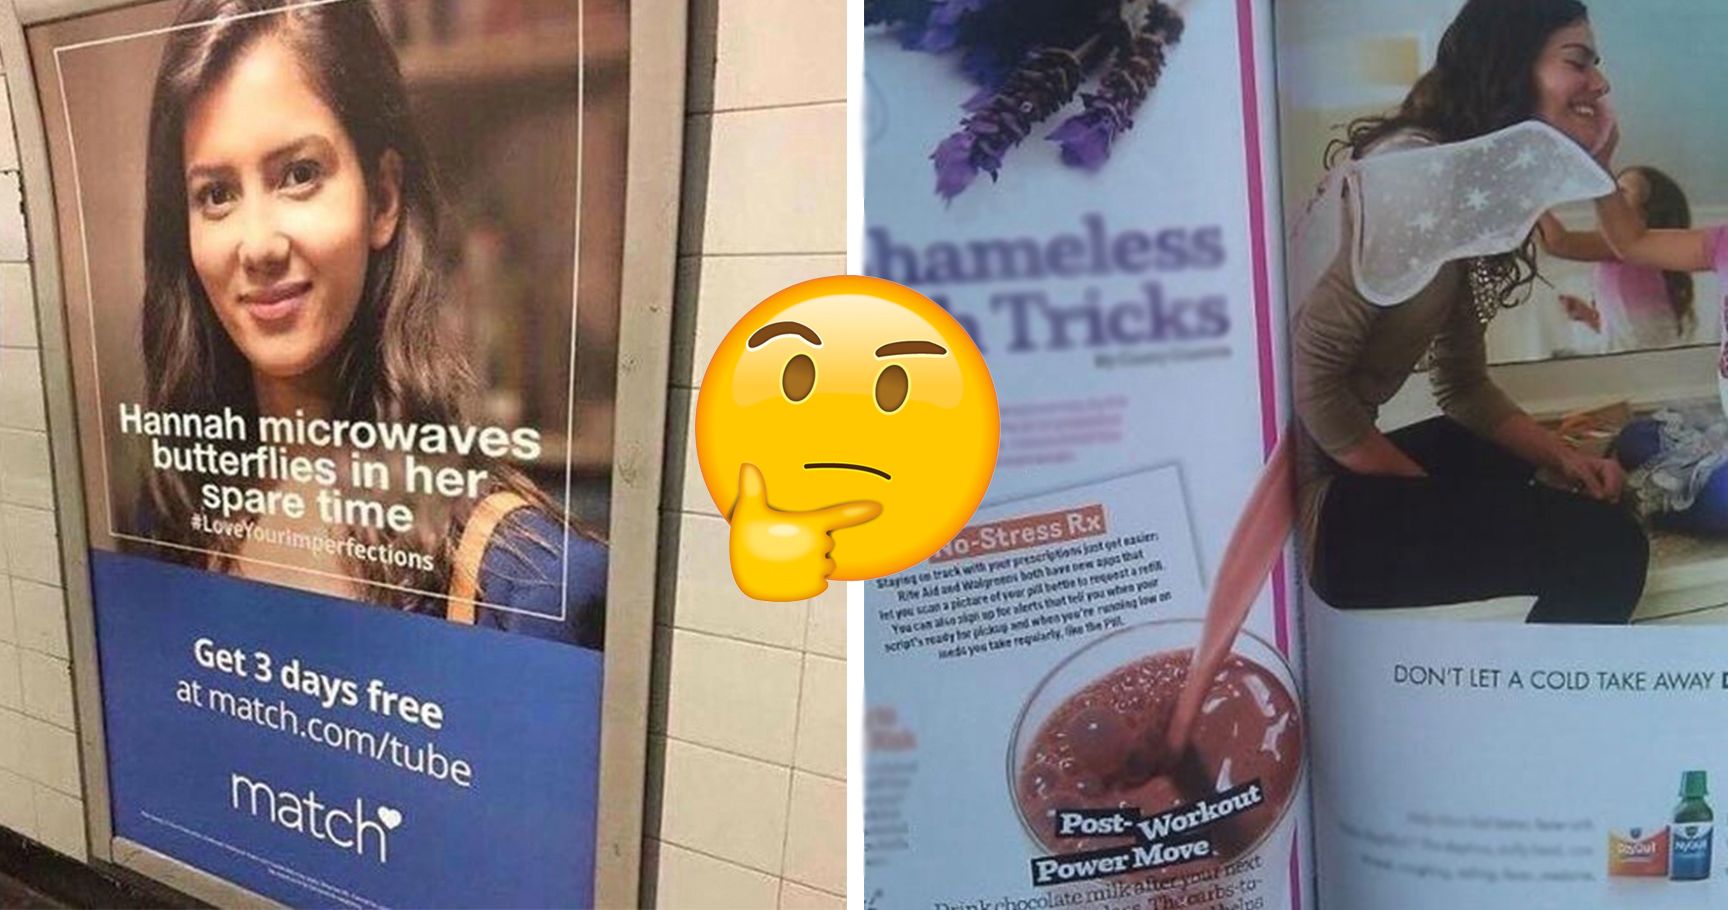 15 Cringeworthy Advertising Fails That'll Make You LOL